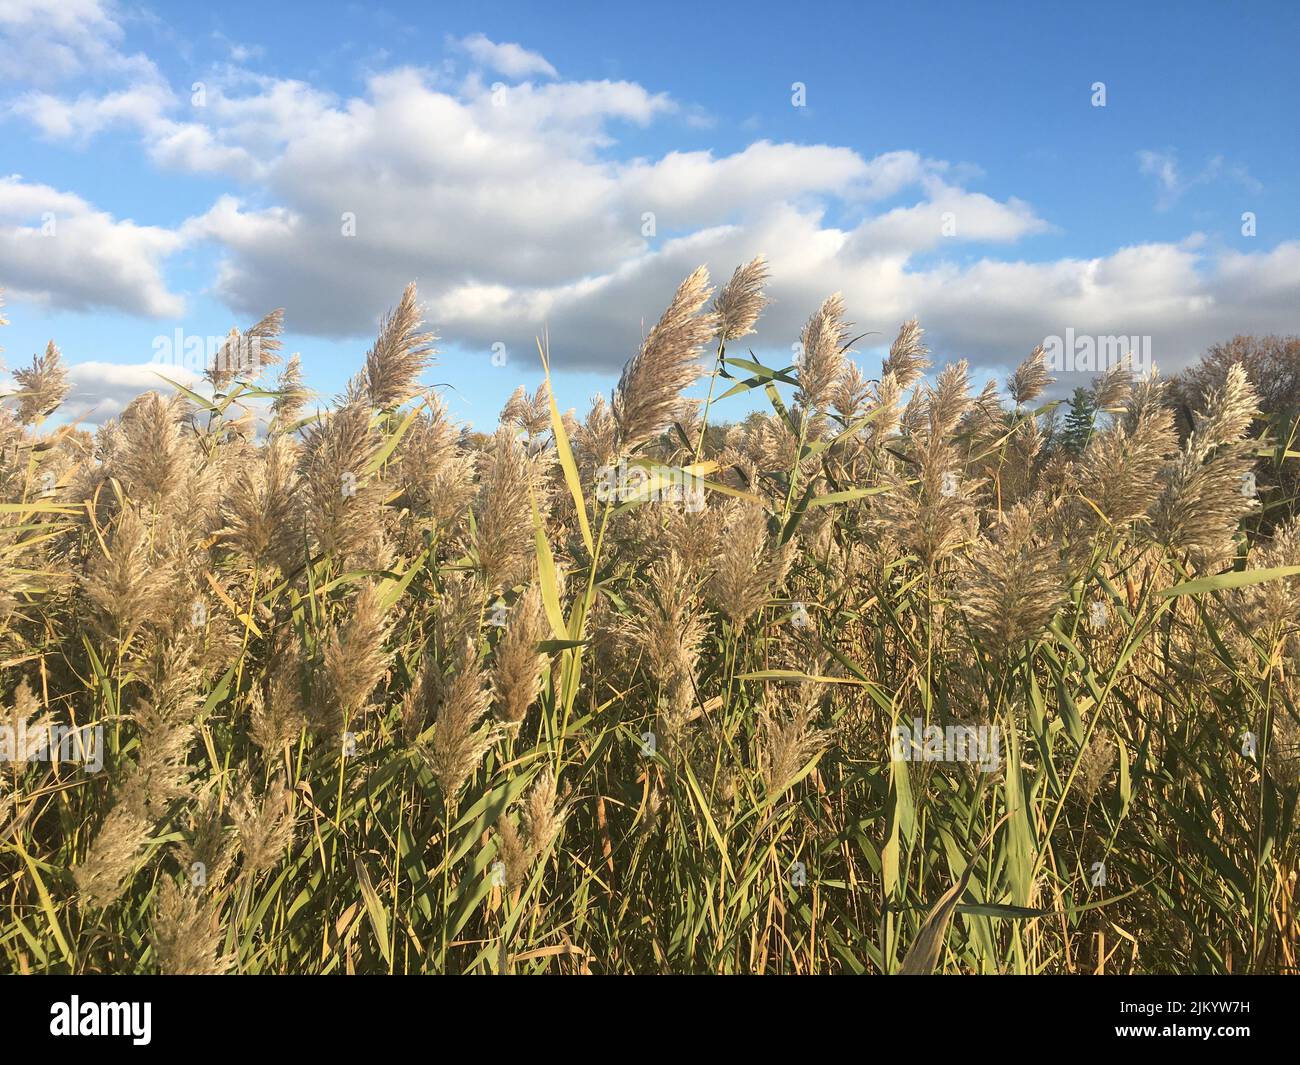 Das hohe, flauschige Gras auf dem Feld unter bewölktem Himmel Stockfoto